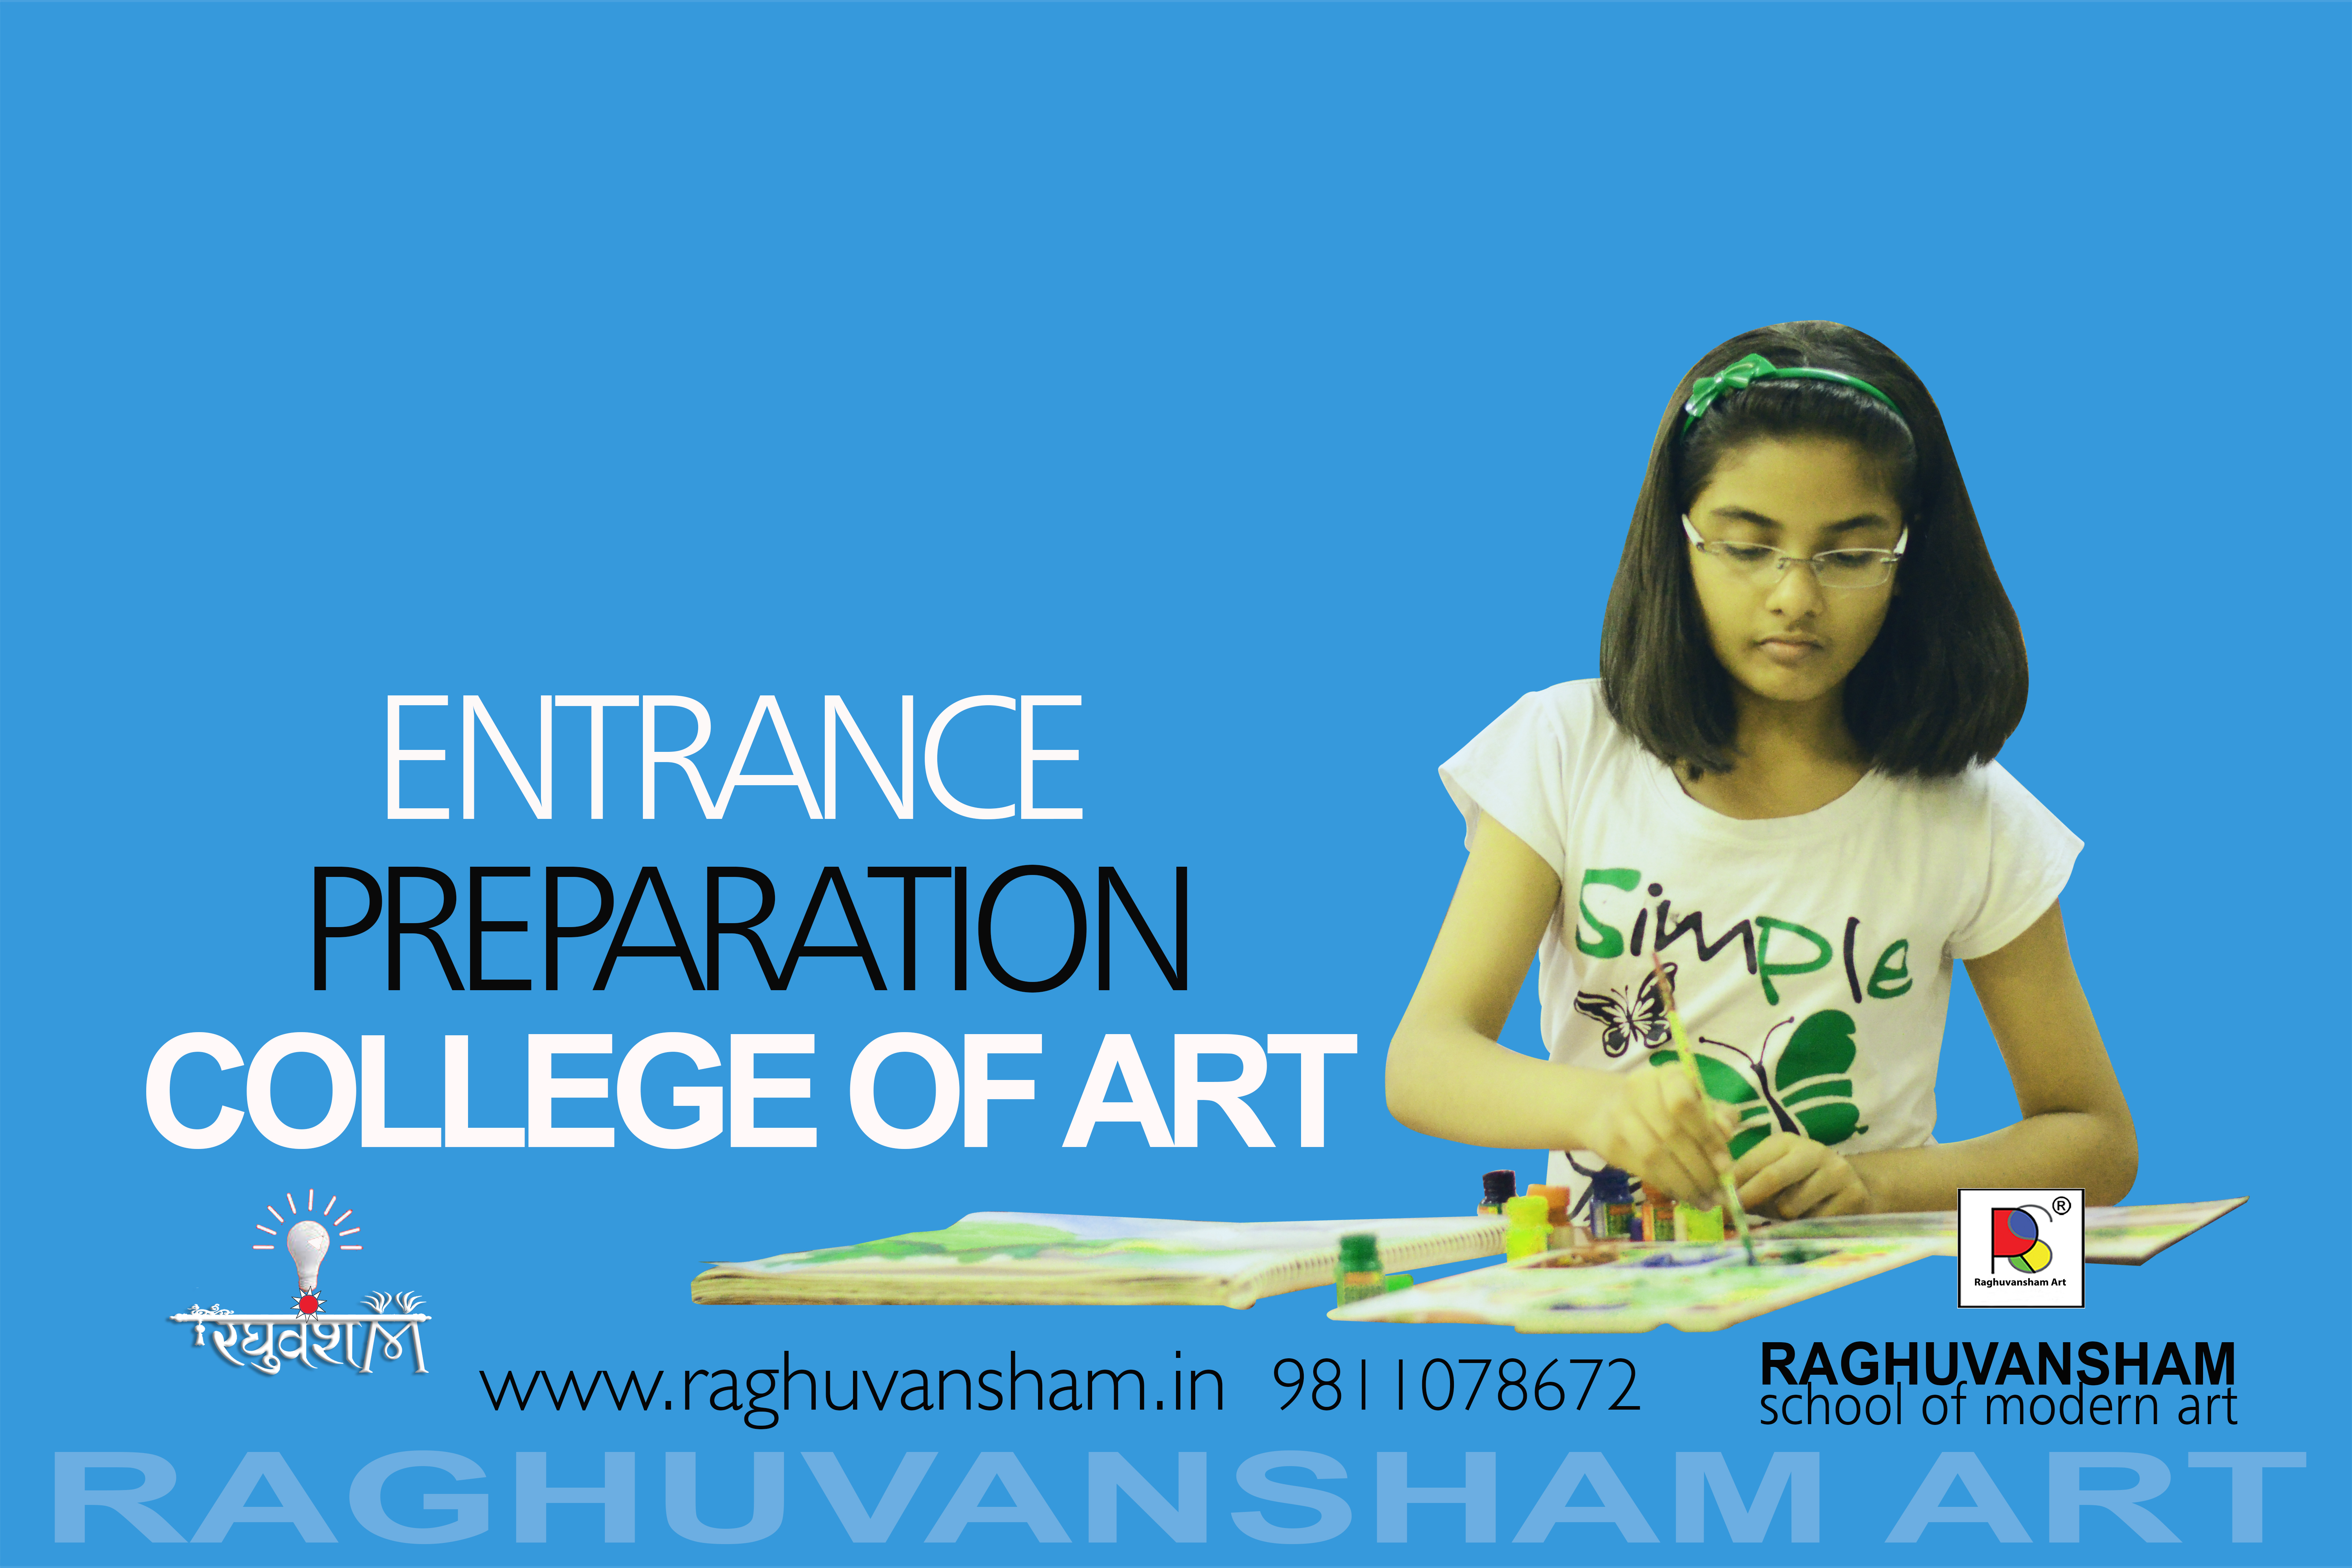 Entrance preparation college of art in delhi punjabi baghEducation and LearningHobby ClassesWest DelhiPunjabi Bagh